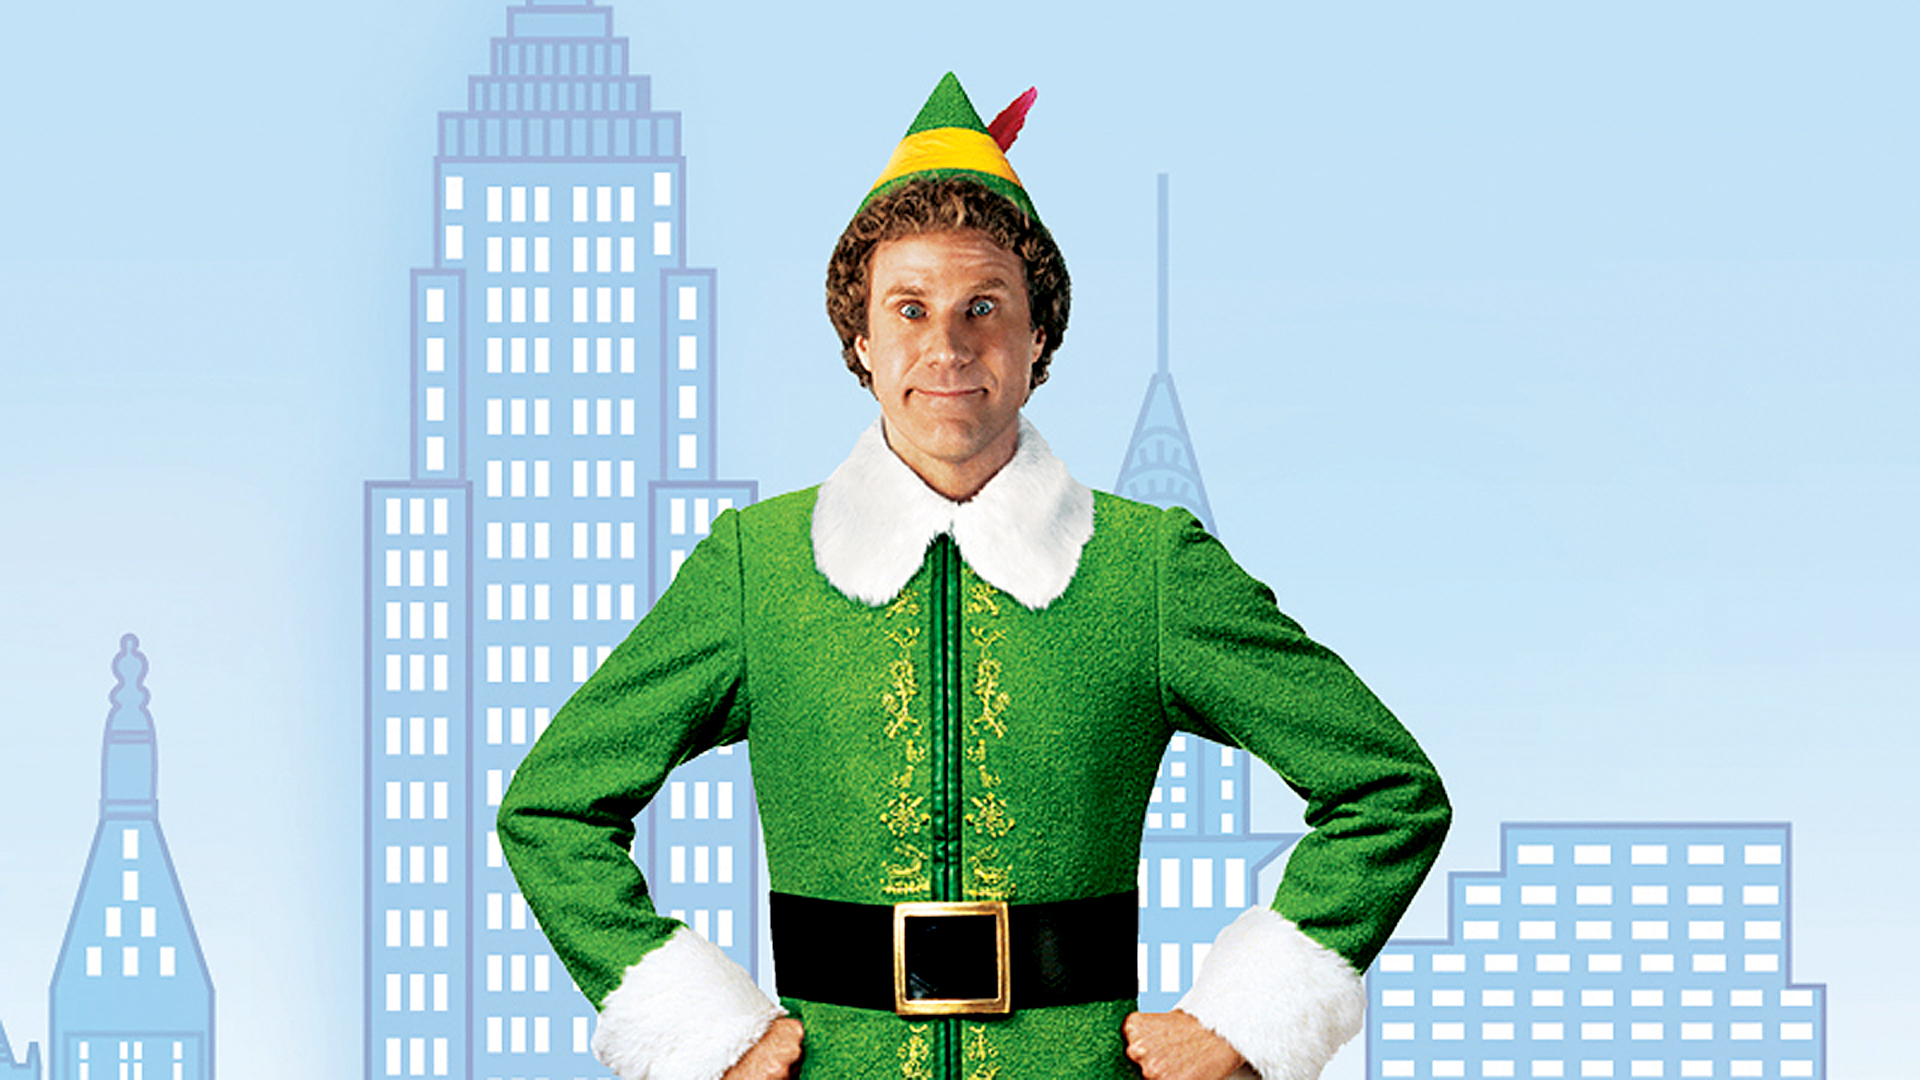 Will Ferrell in the movie Elf